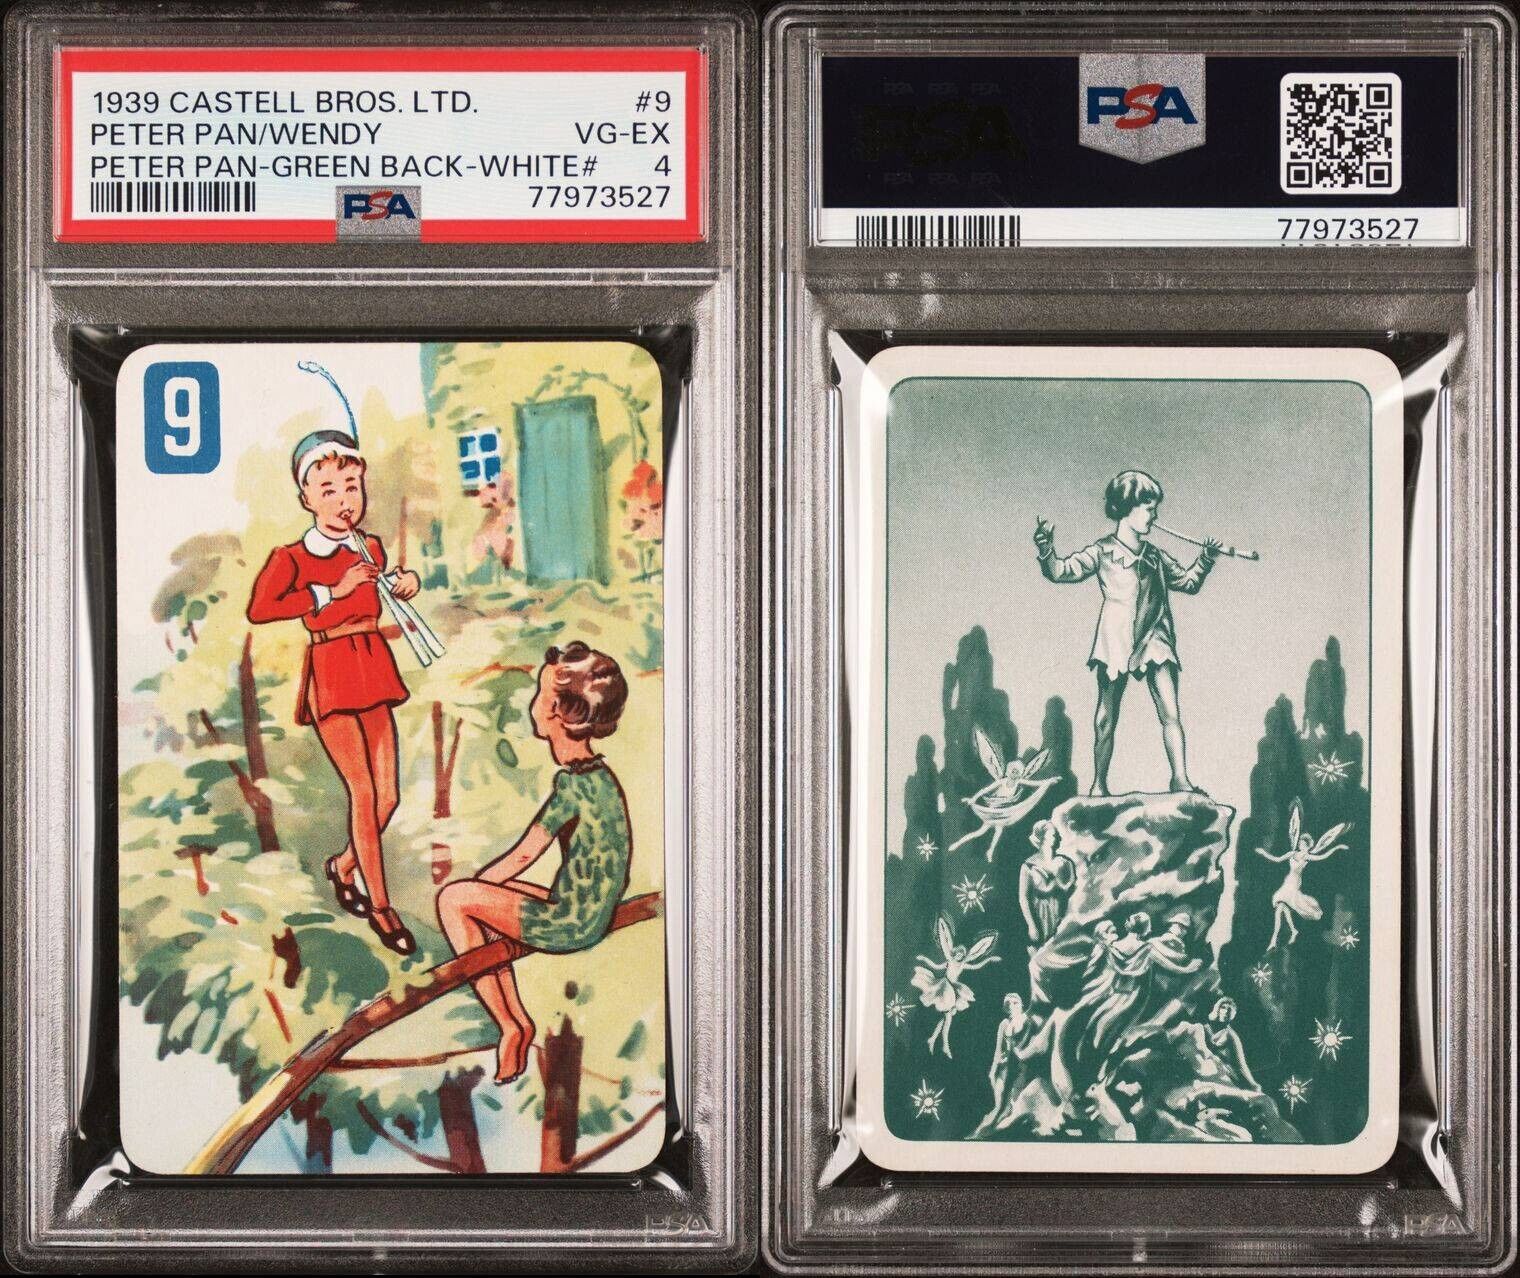 1939 CASTELL BROS. LTD. PETER PAN WENDY GREEN BACK PSA 4 VG-EX CARD RARE